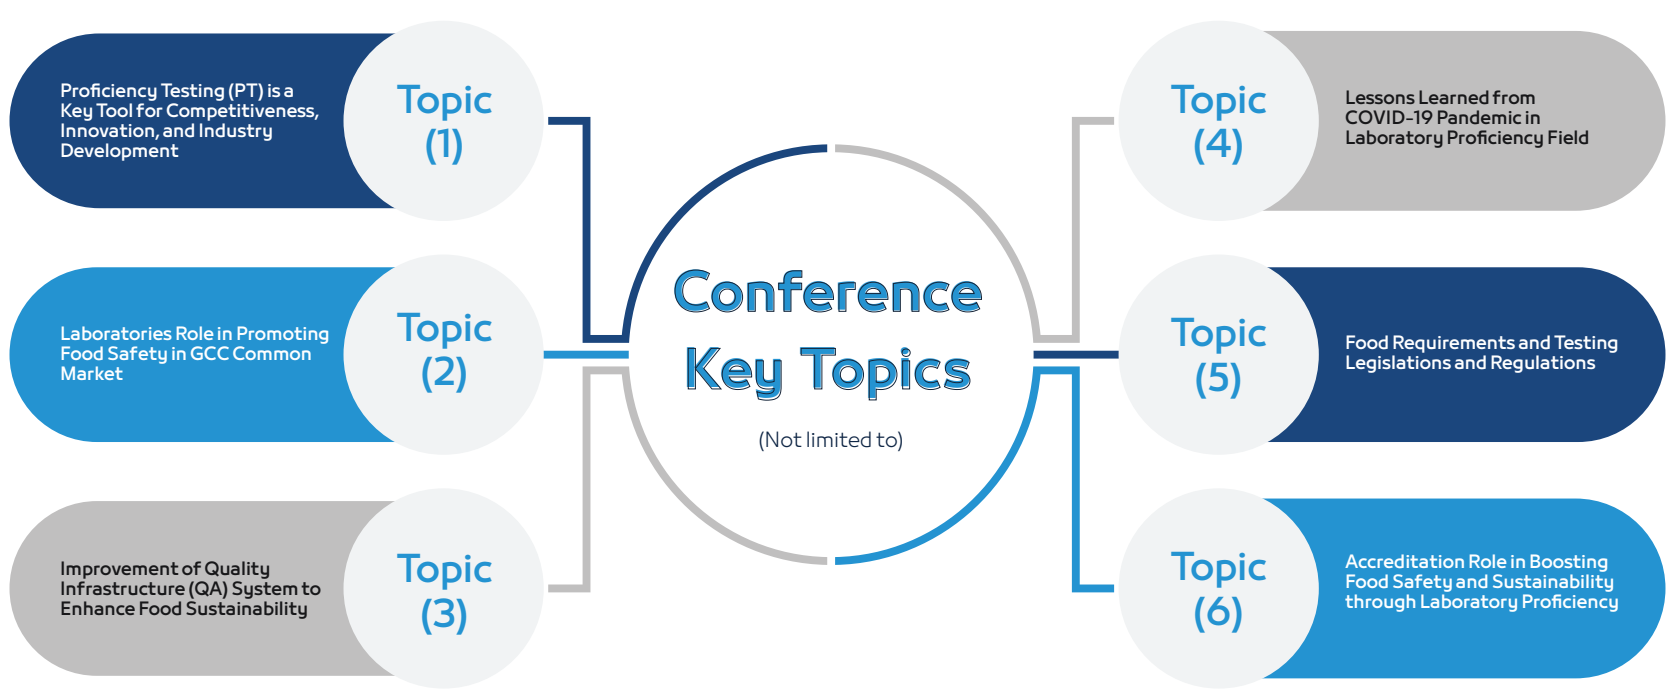 Conference Keys